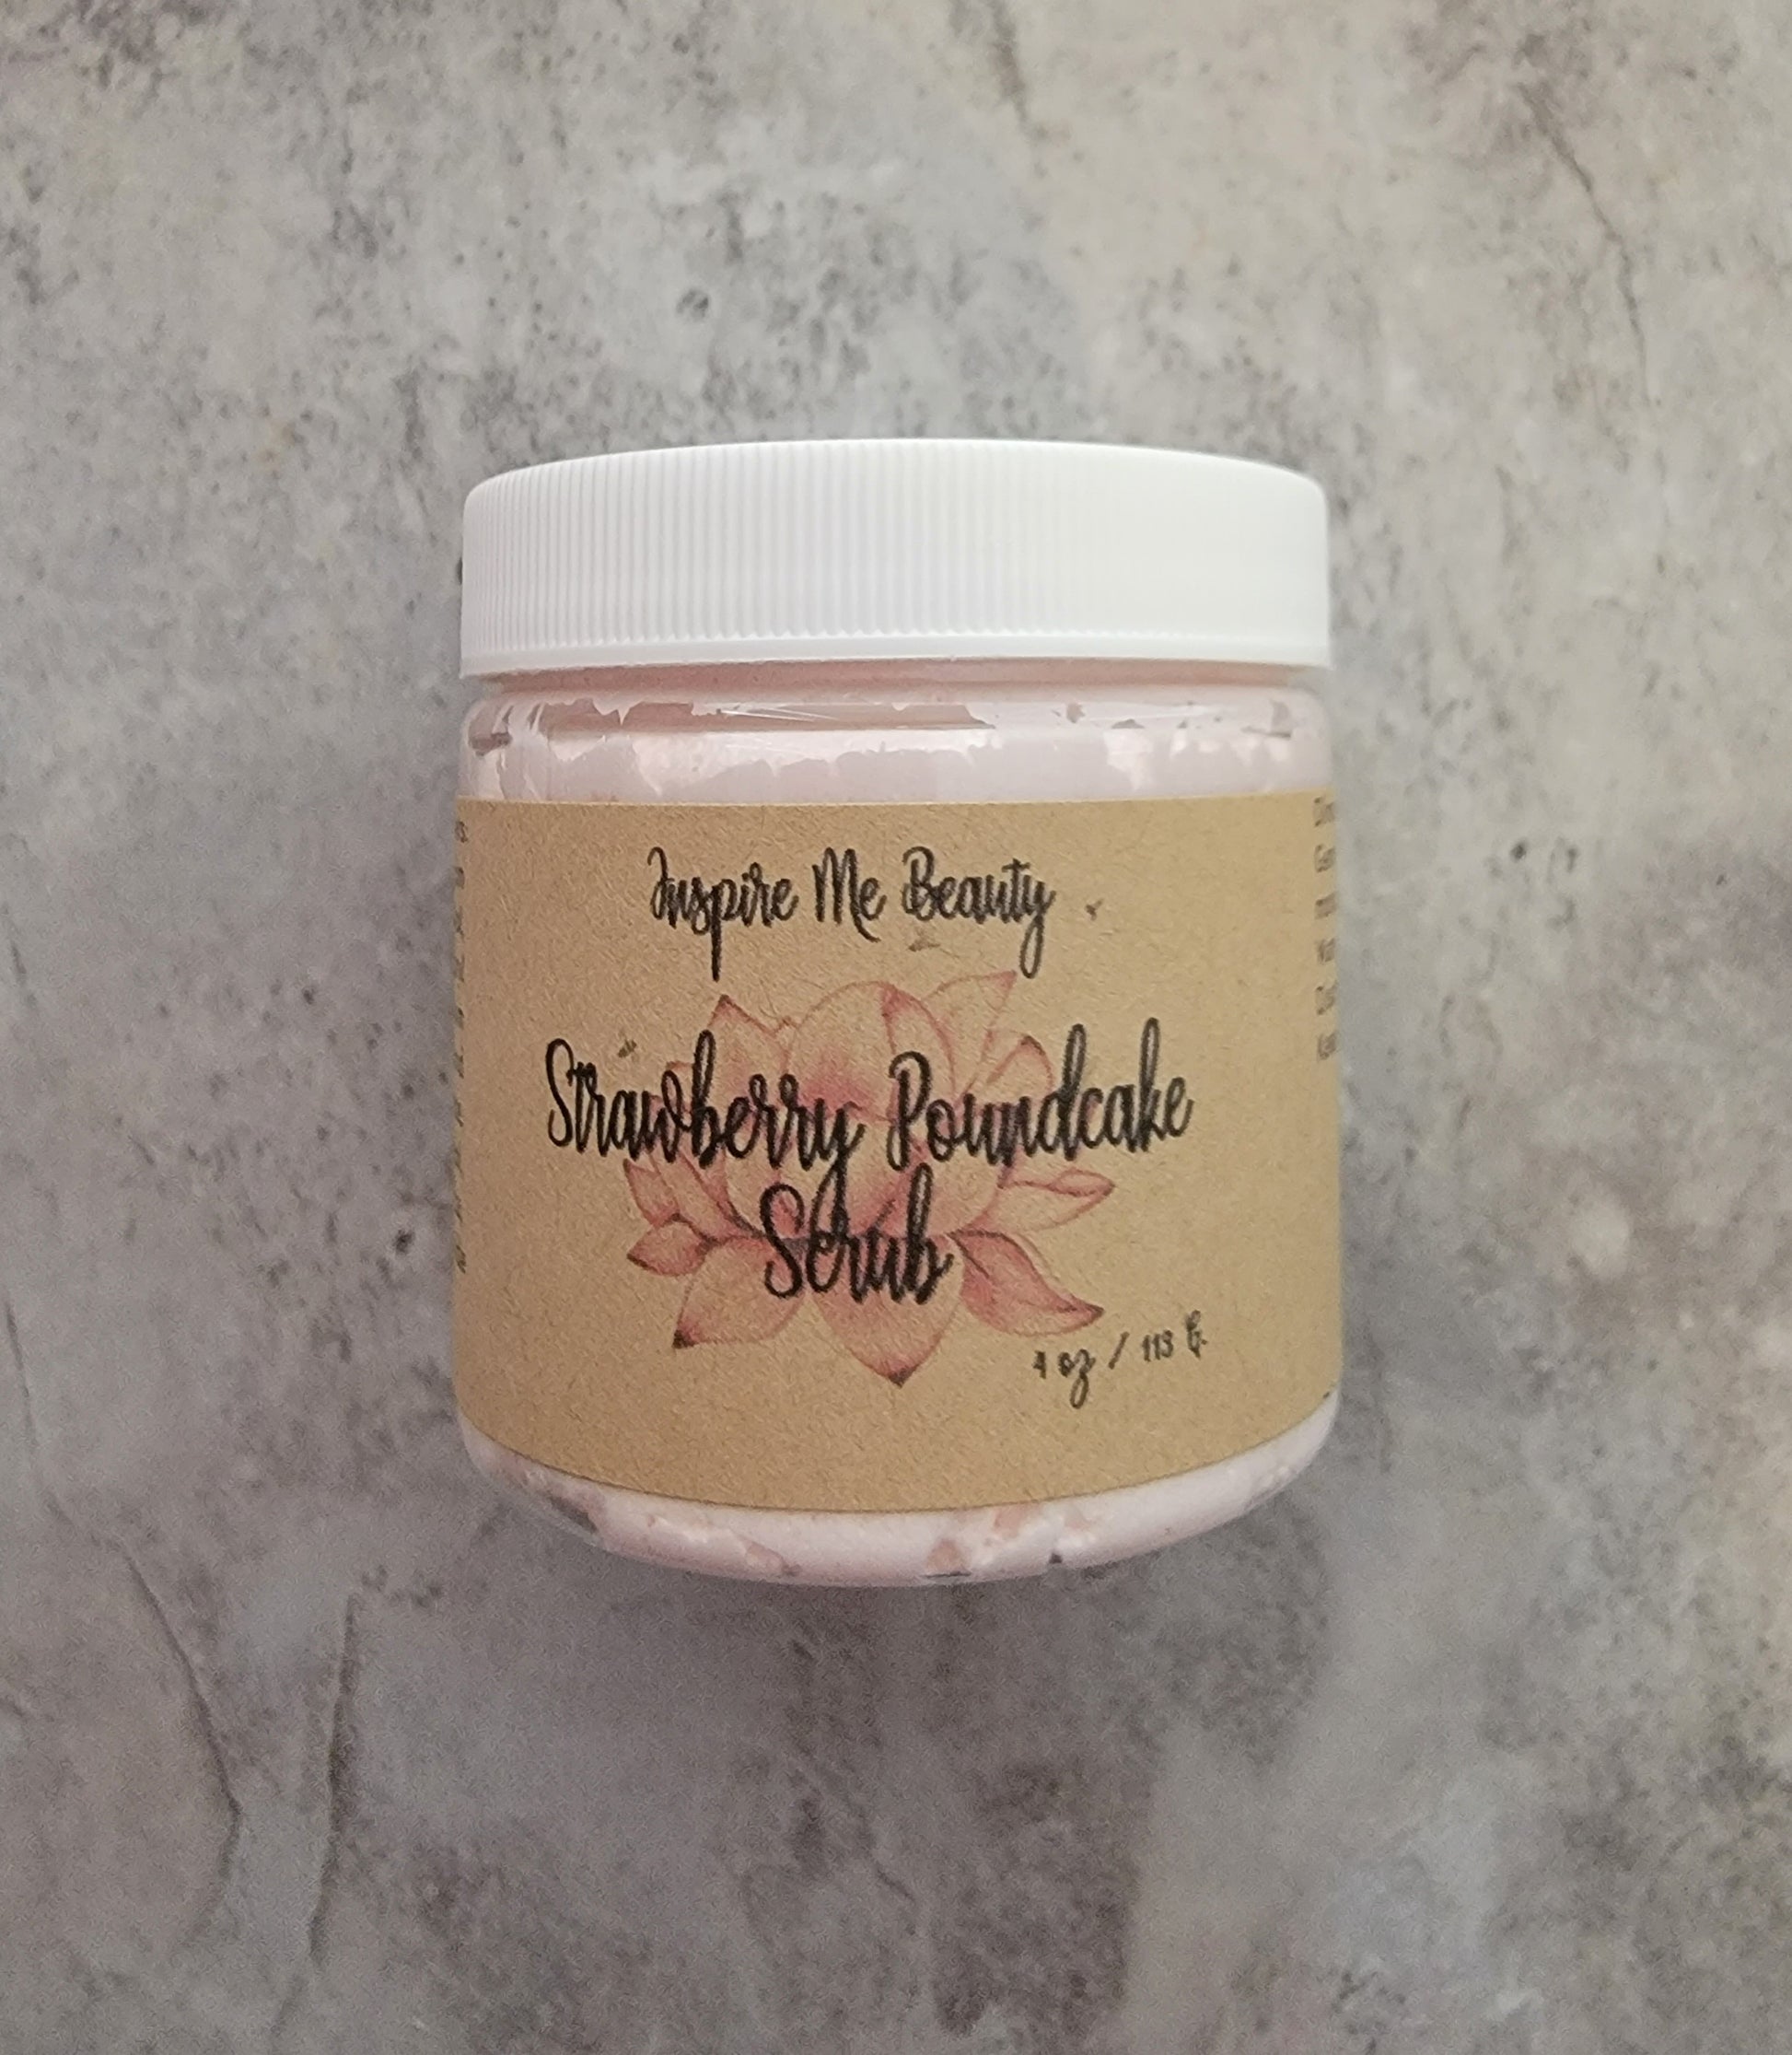 Strawberry Poundcake Soap Scrub by Inspire Me Beauty